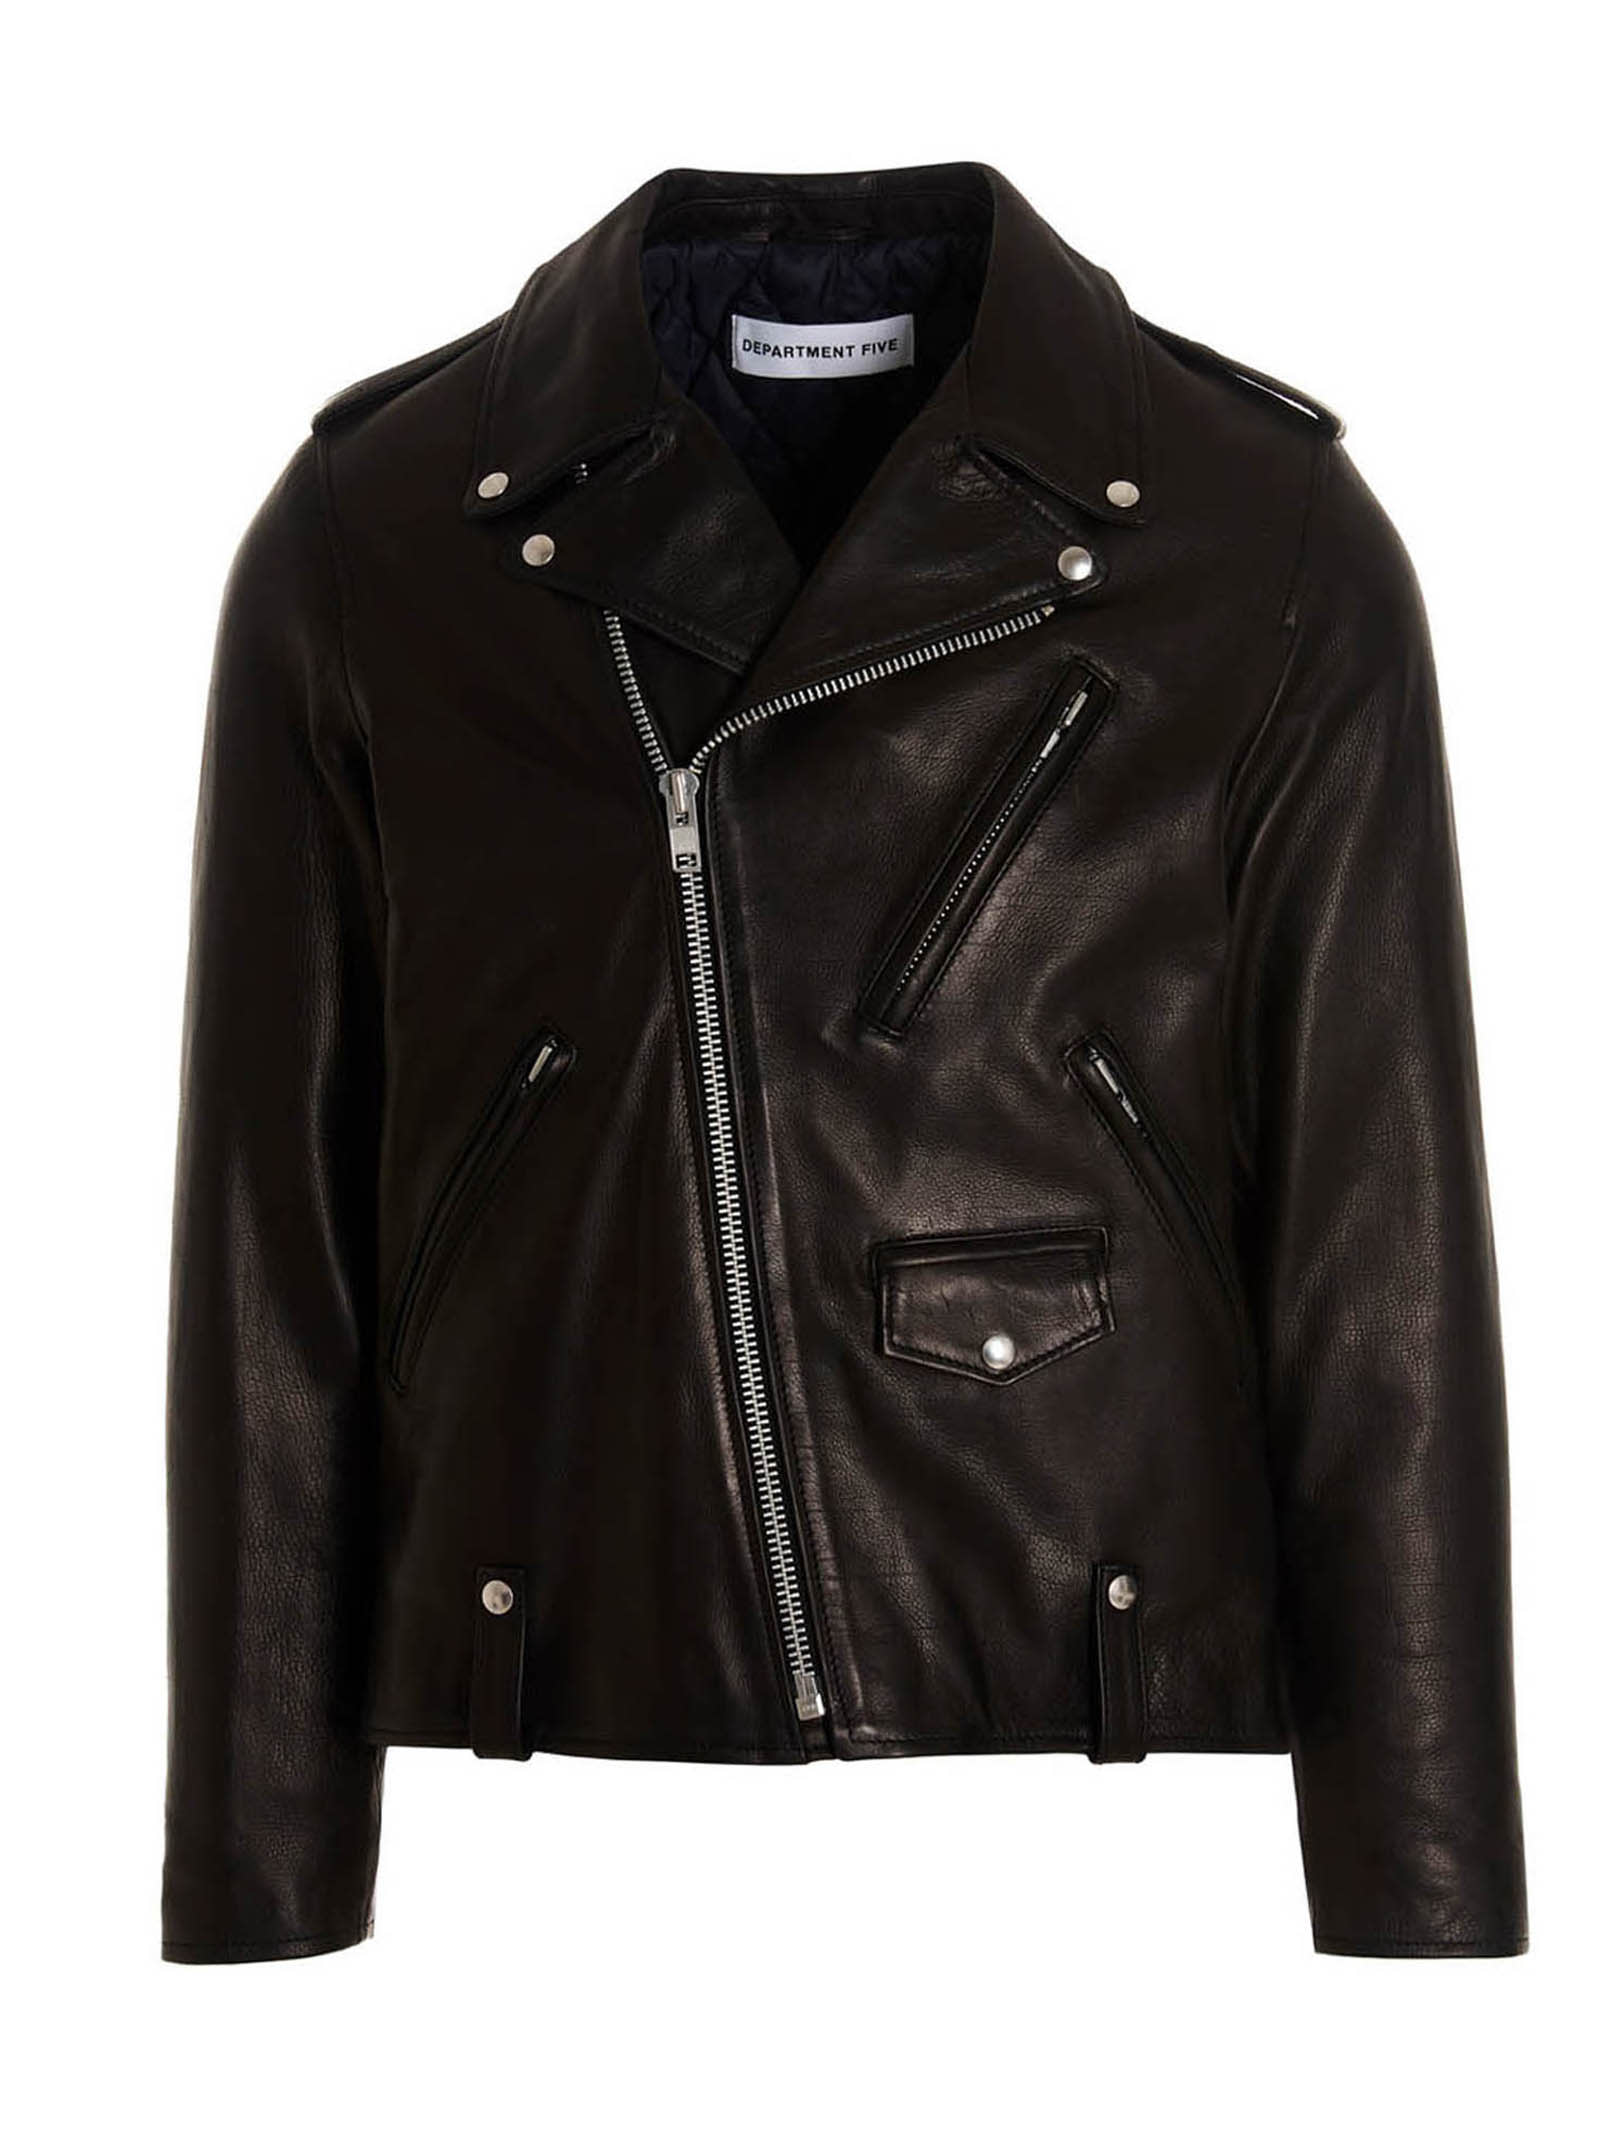 Department 5 Harm Leather Biker Jacket In Black | ModeSens